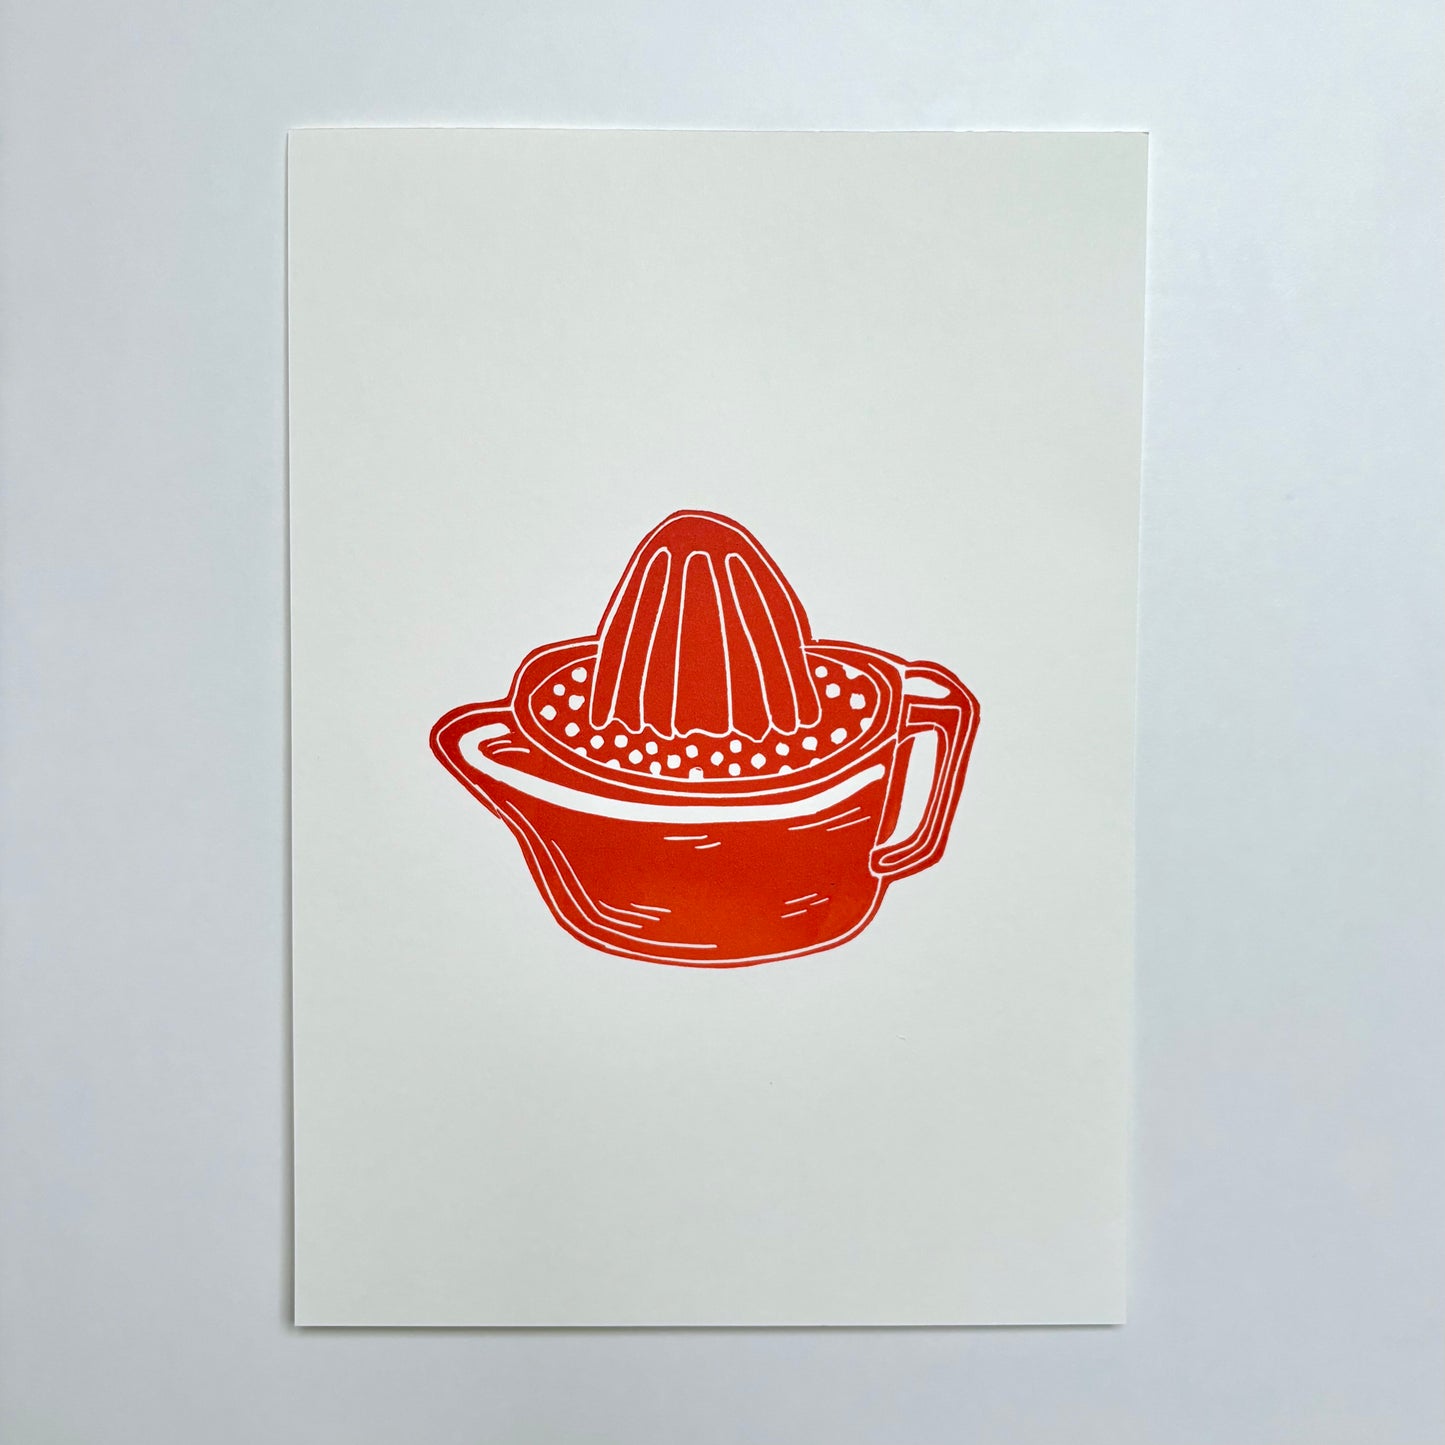 Linoldruck "The edge of the plate" by Kati Lammert